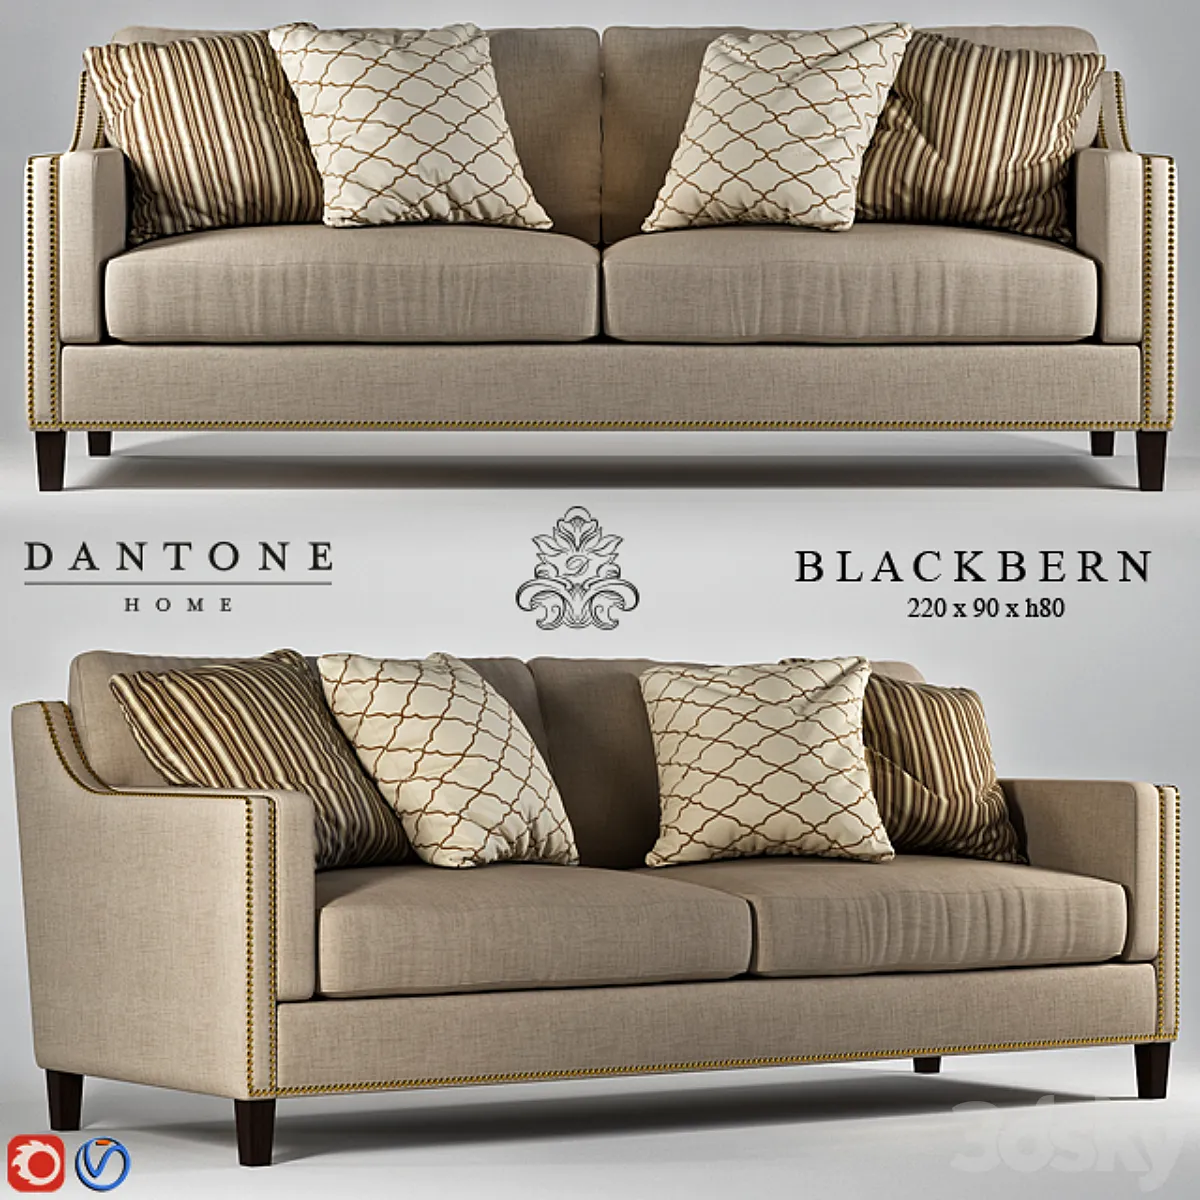 3dsky - Dantone Blackbern sofa